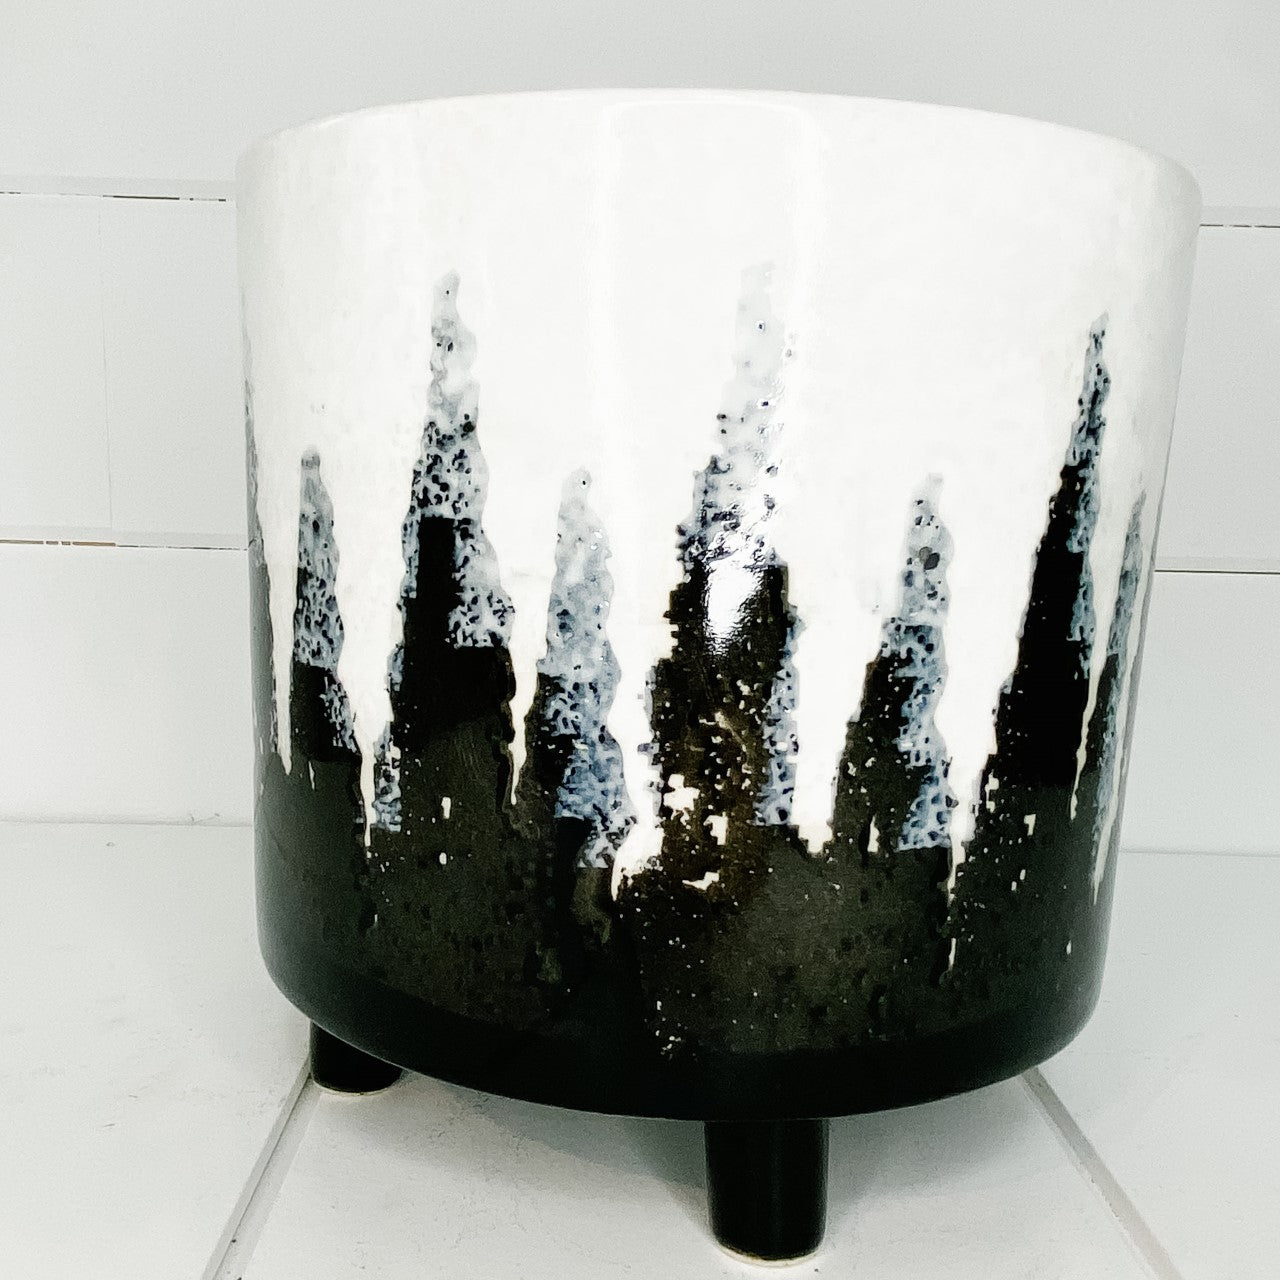 Ivory/Black ceramic planter with feet.